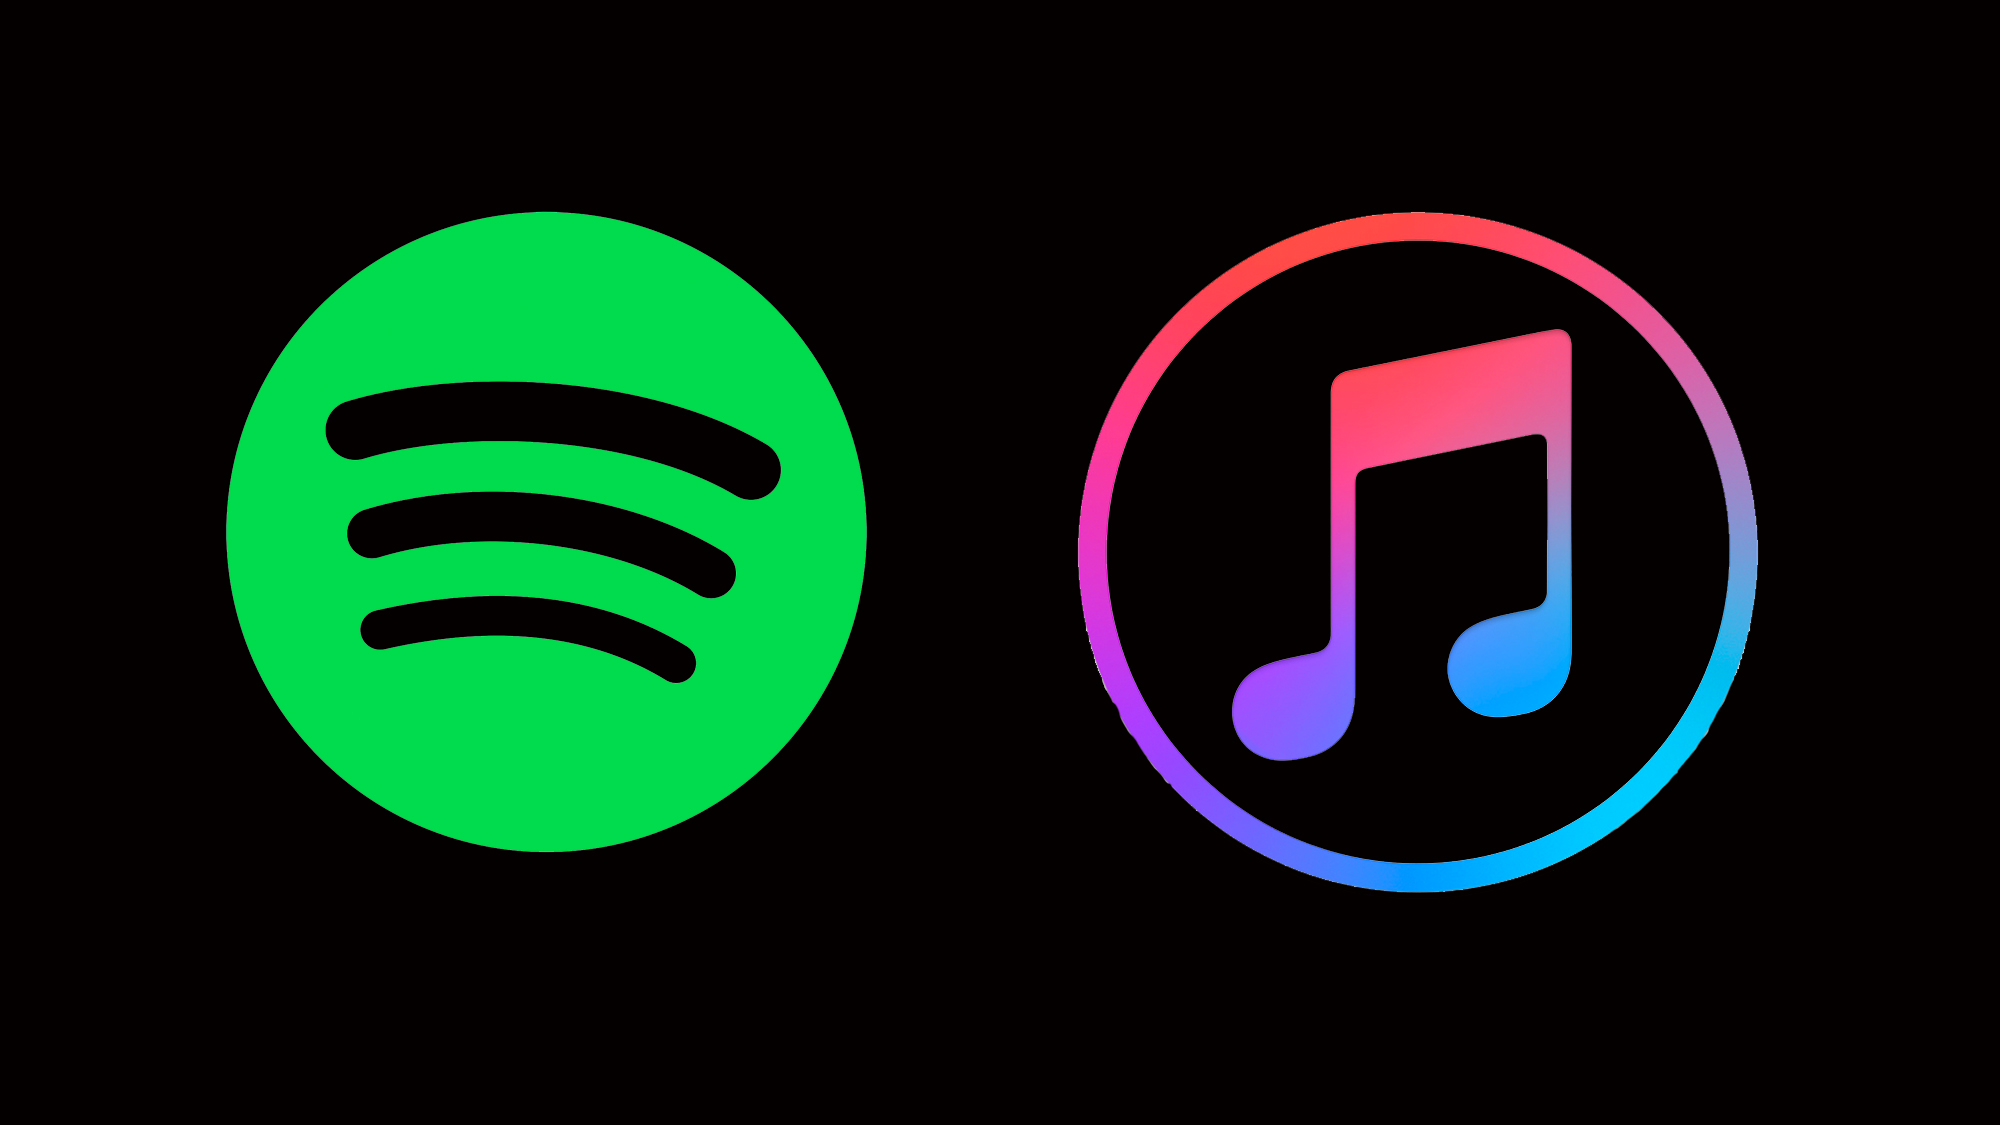 apple music & spotify